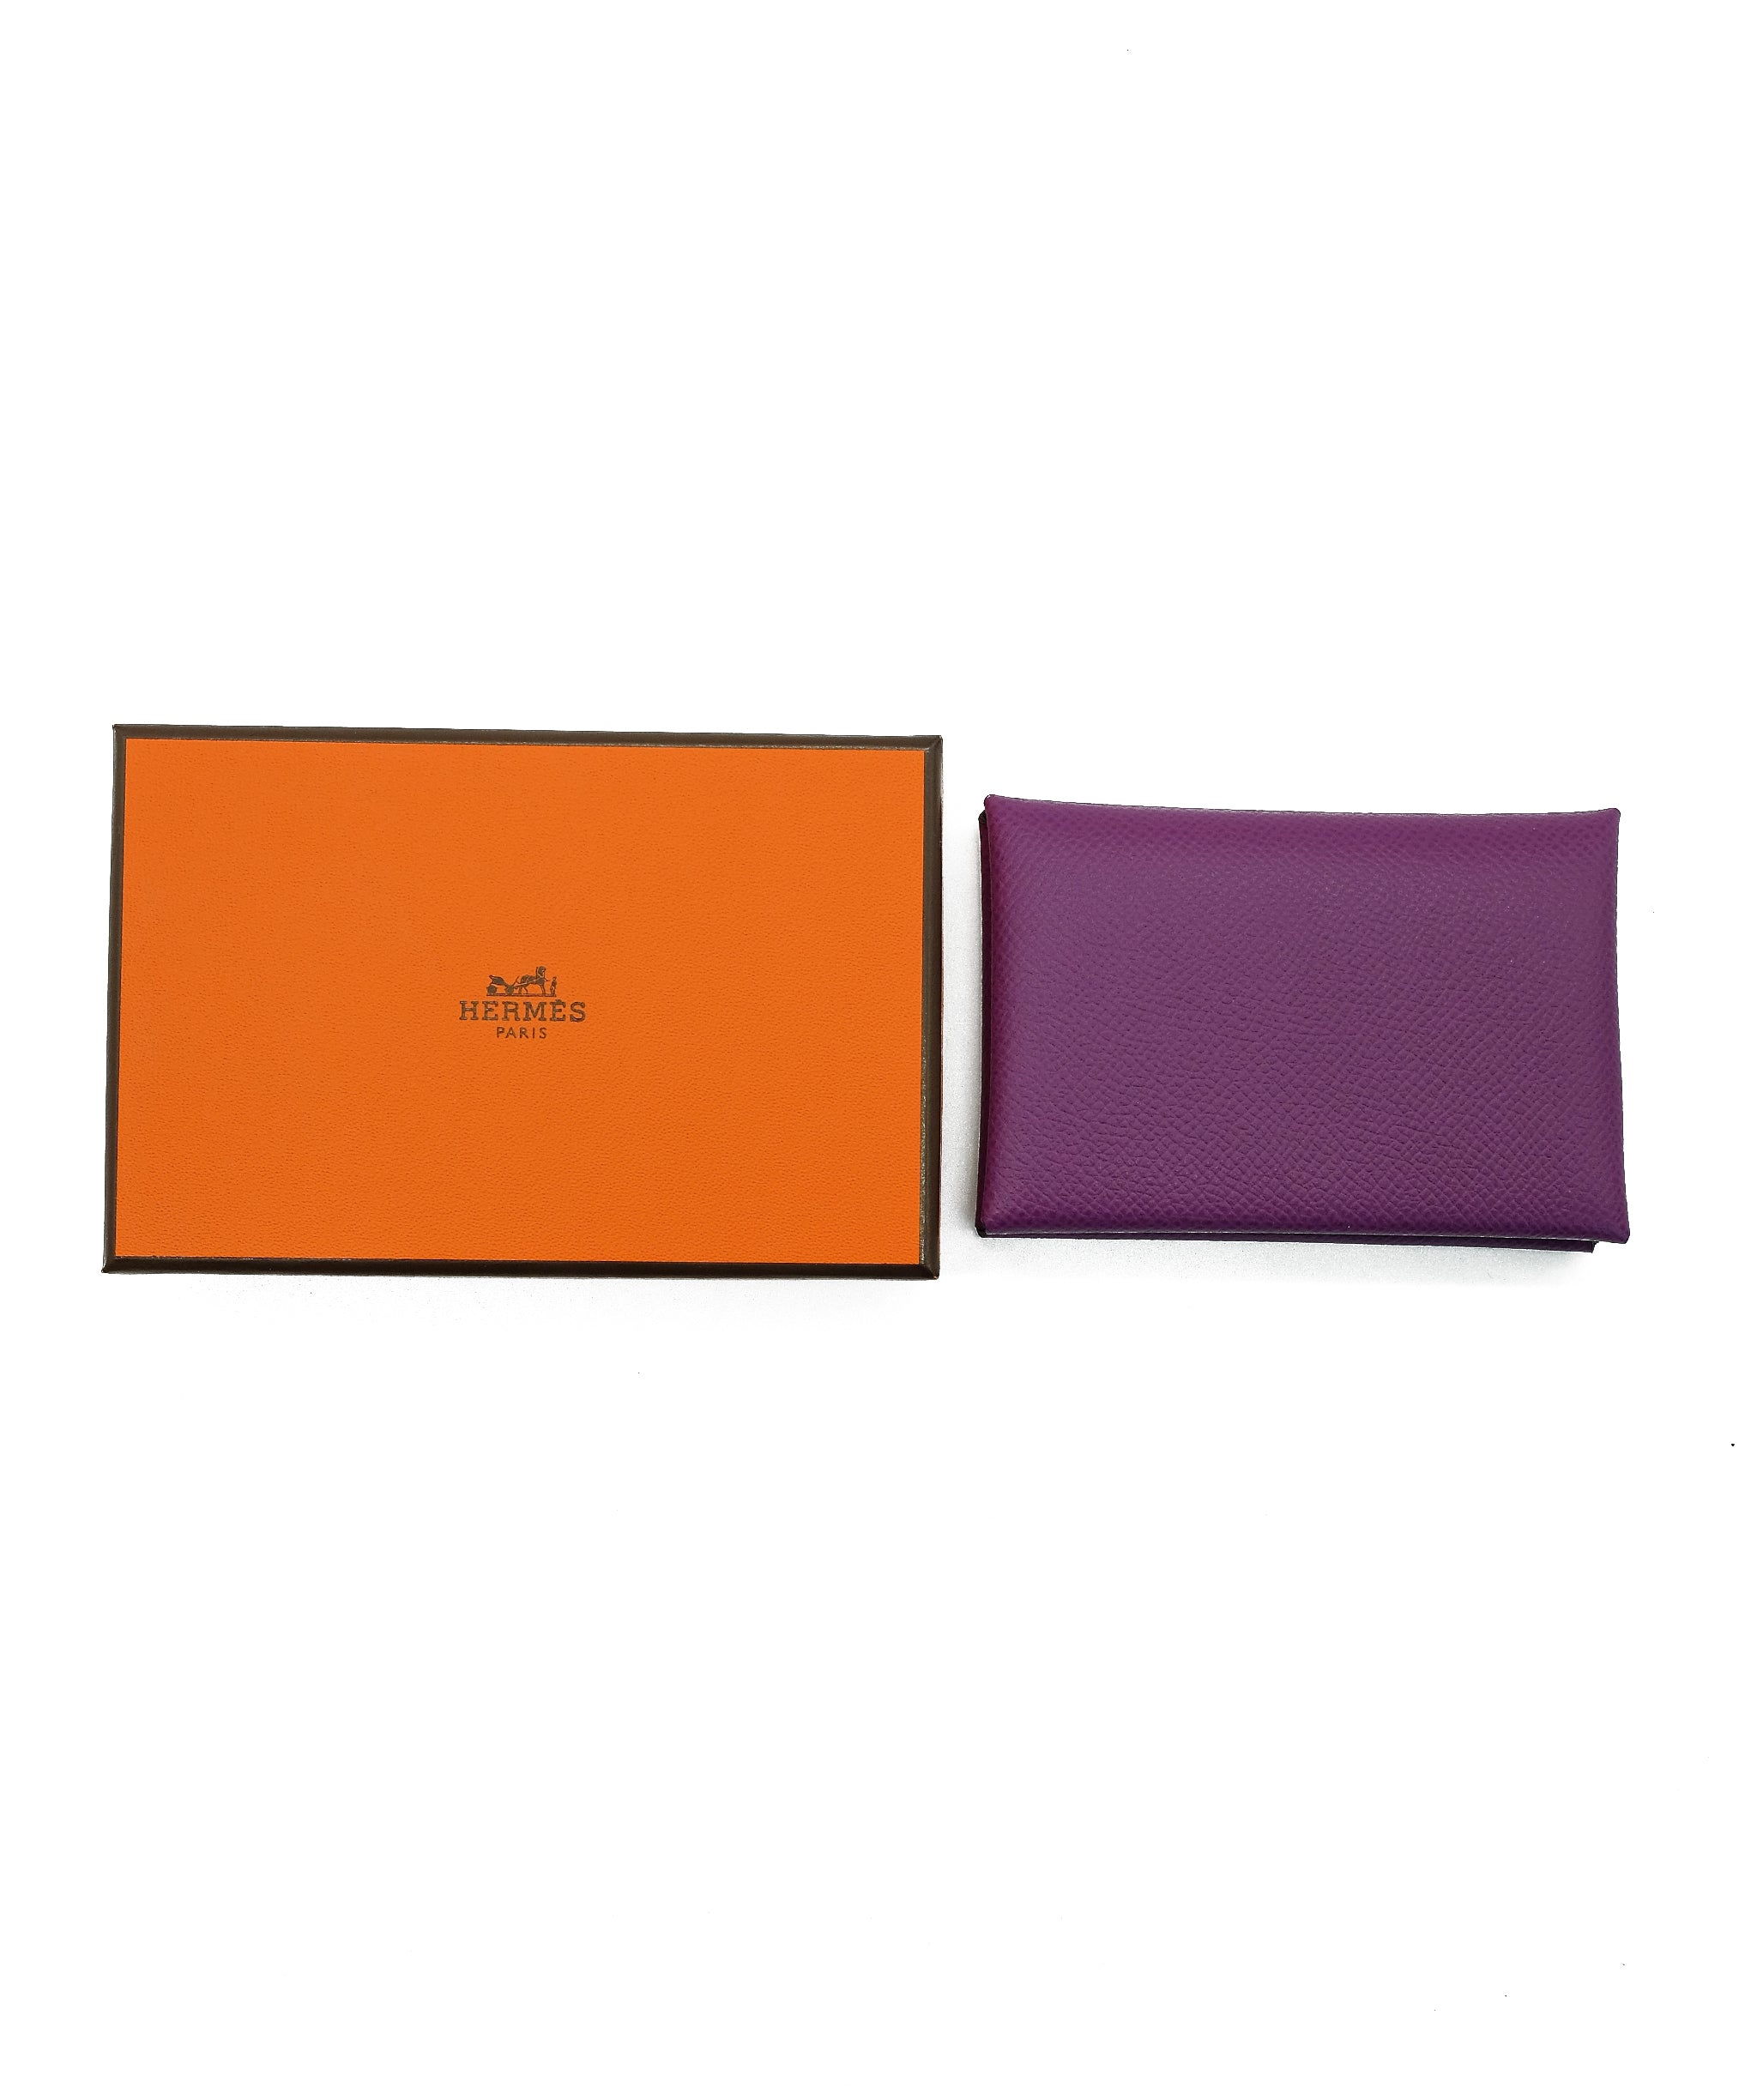 Hermes SLG Calvi Duo Cardholder, Wallet, Caramel/Sakura PInk, New in Box  GA001 - Julia Rose Boston